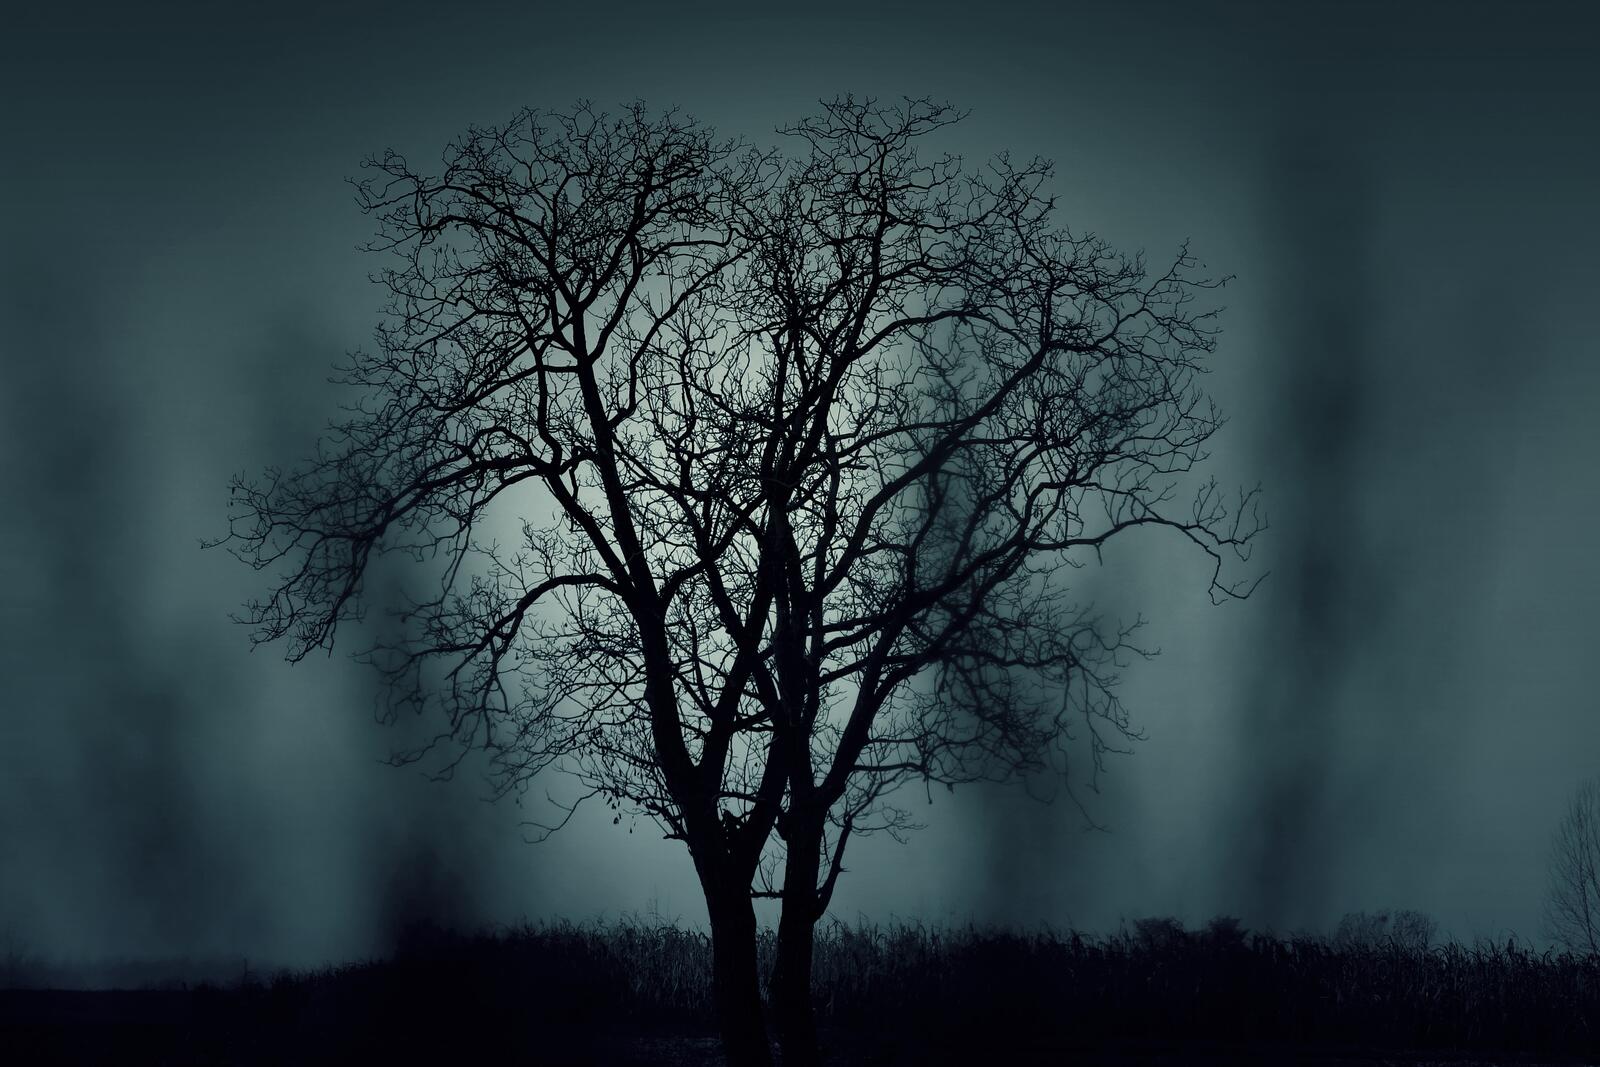 Бесплатное фото Силуэт дерева без листьев на фоне тумана